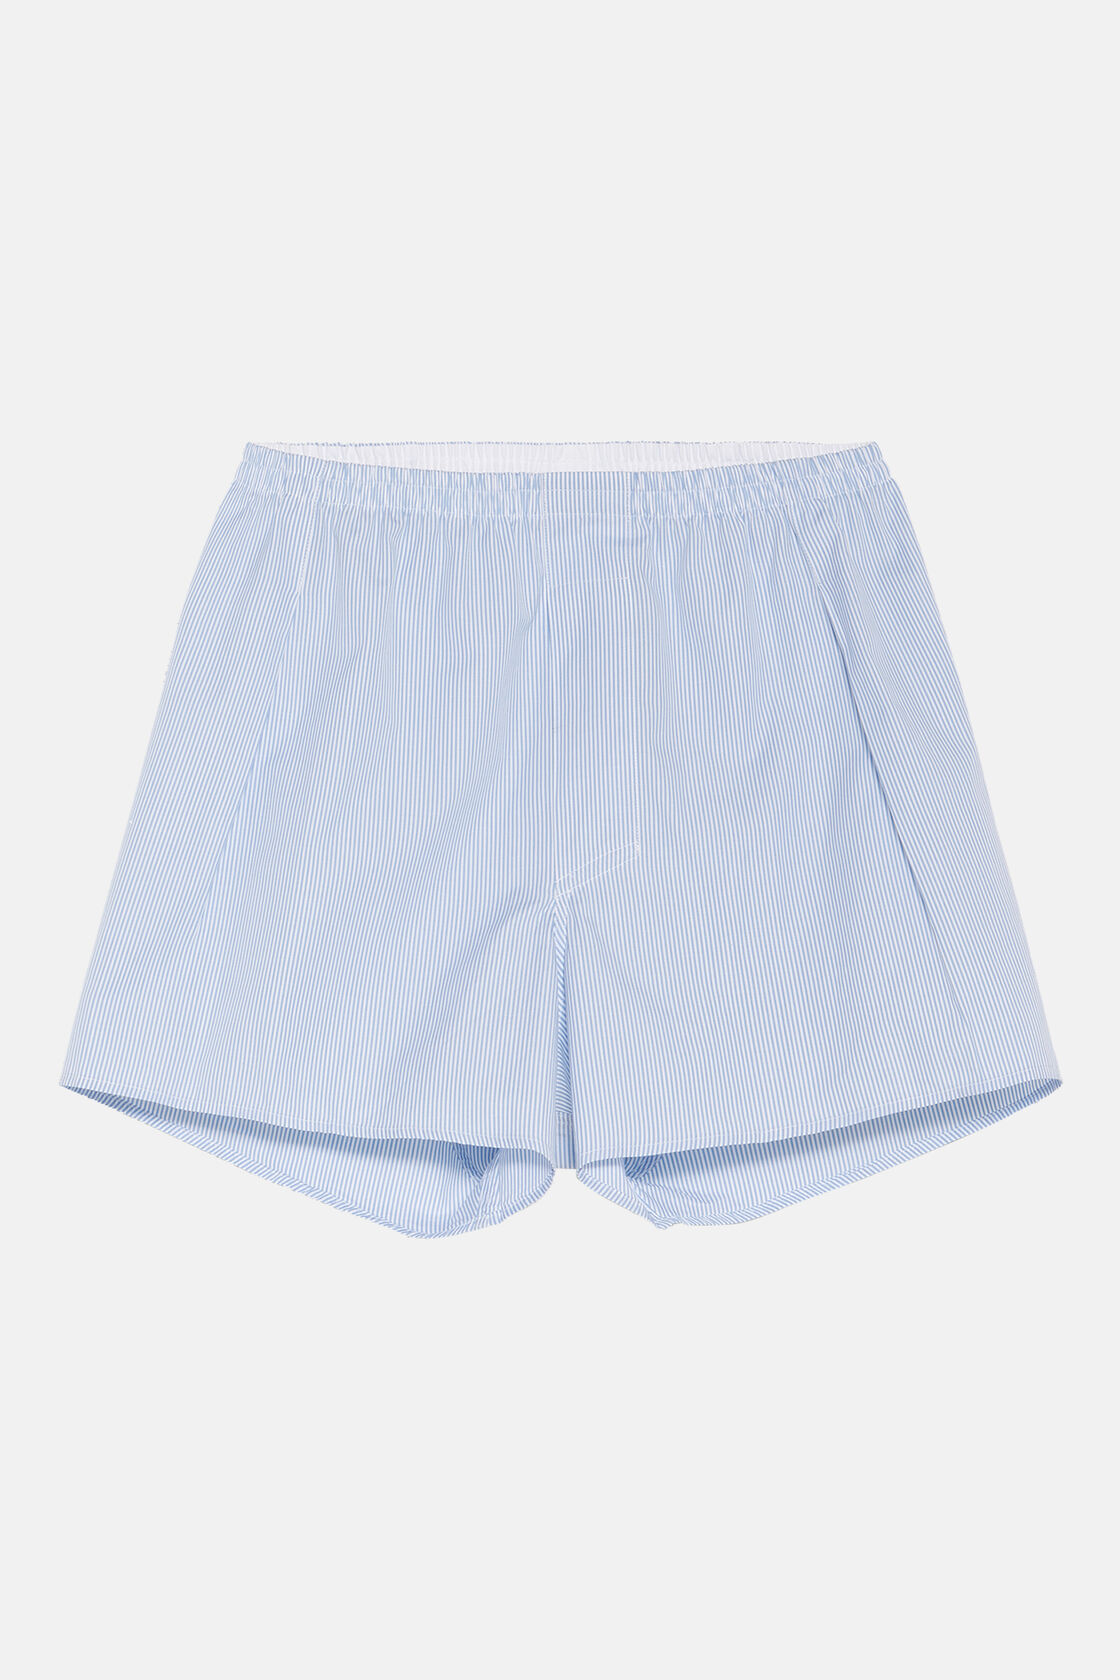 Light Blue Striped Cotton Boxer Shorts, Stripe Light blue, hi-res